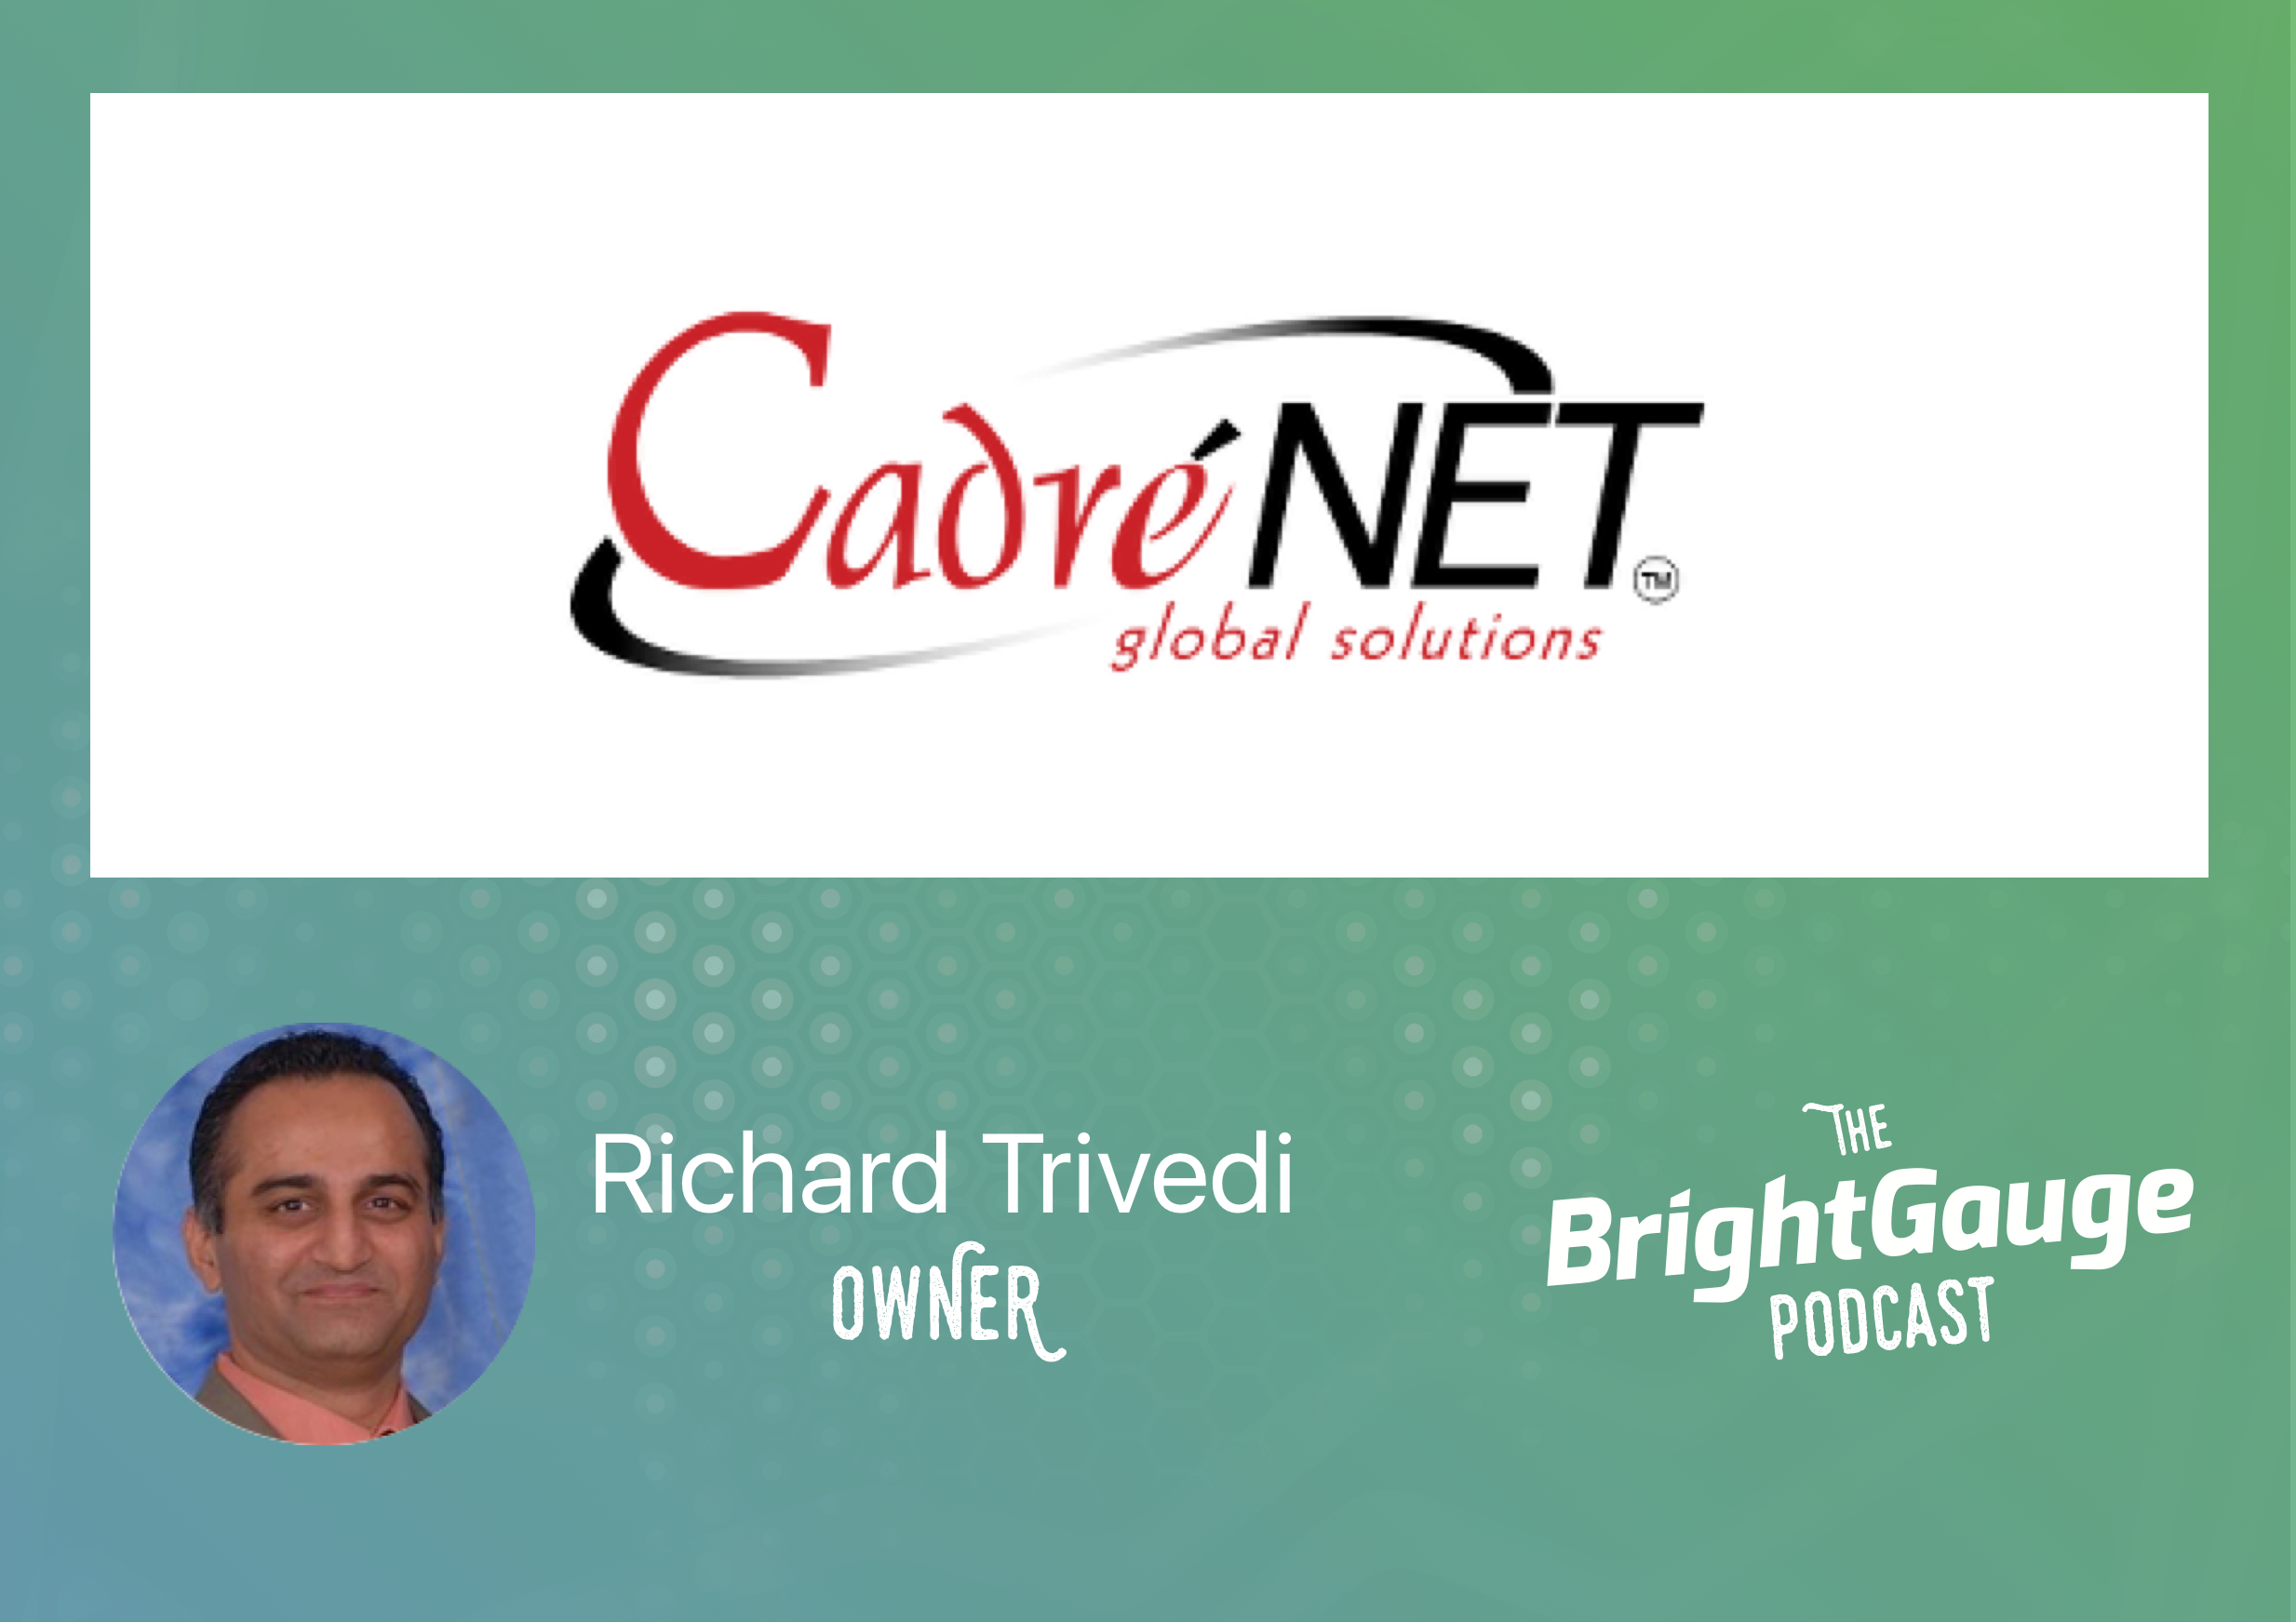 [Podcast] Episode 18 with Richard Trivedi of CadreNet